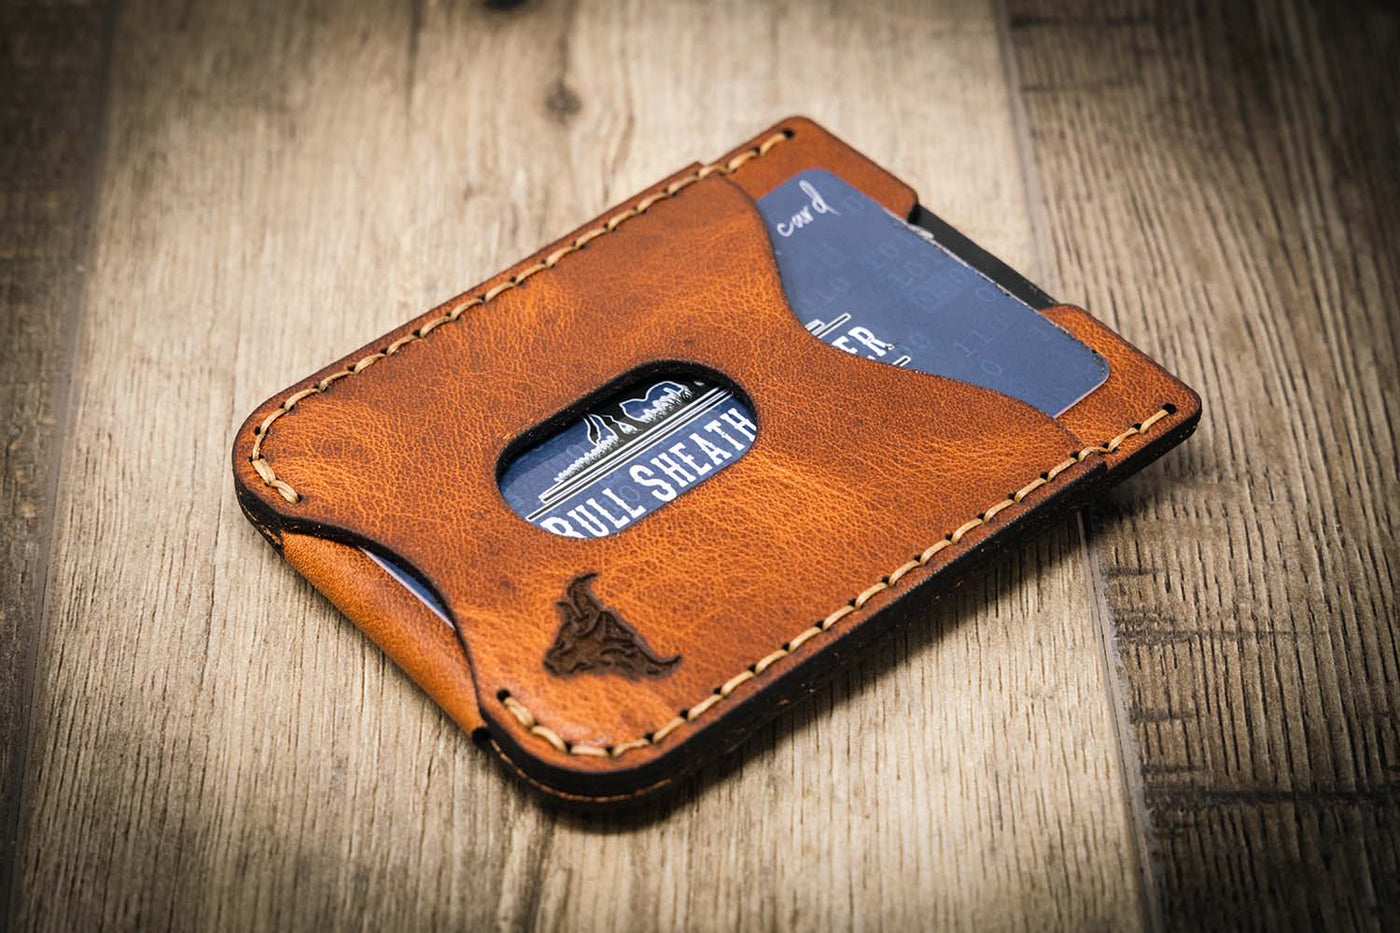 WALLET Slim Leather Wallet With Metal Money Clip - Dark Brown